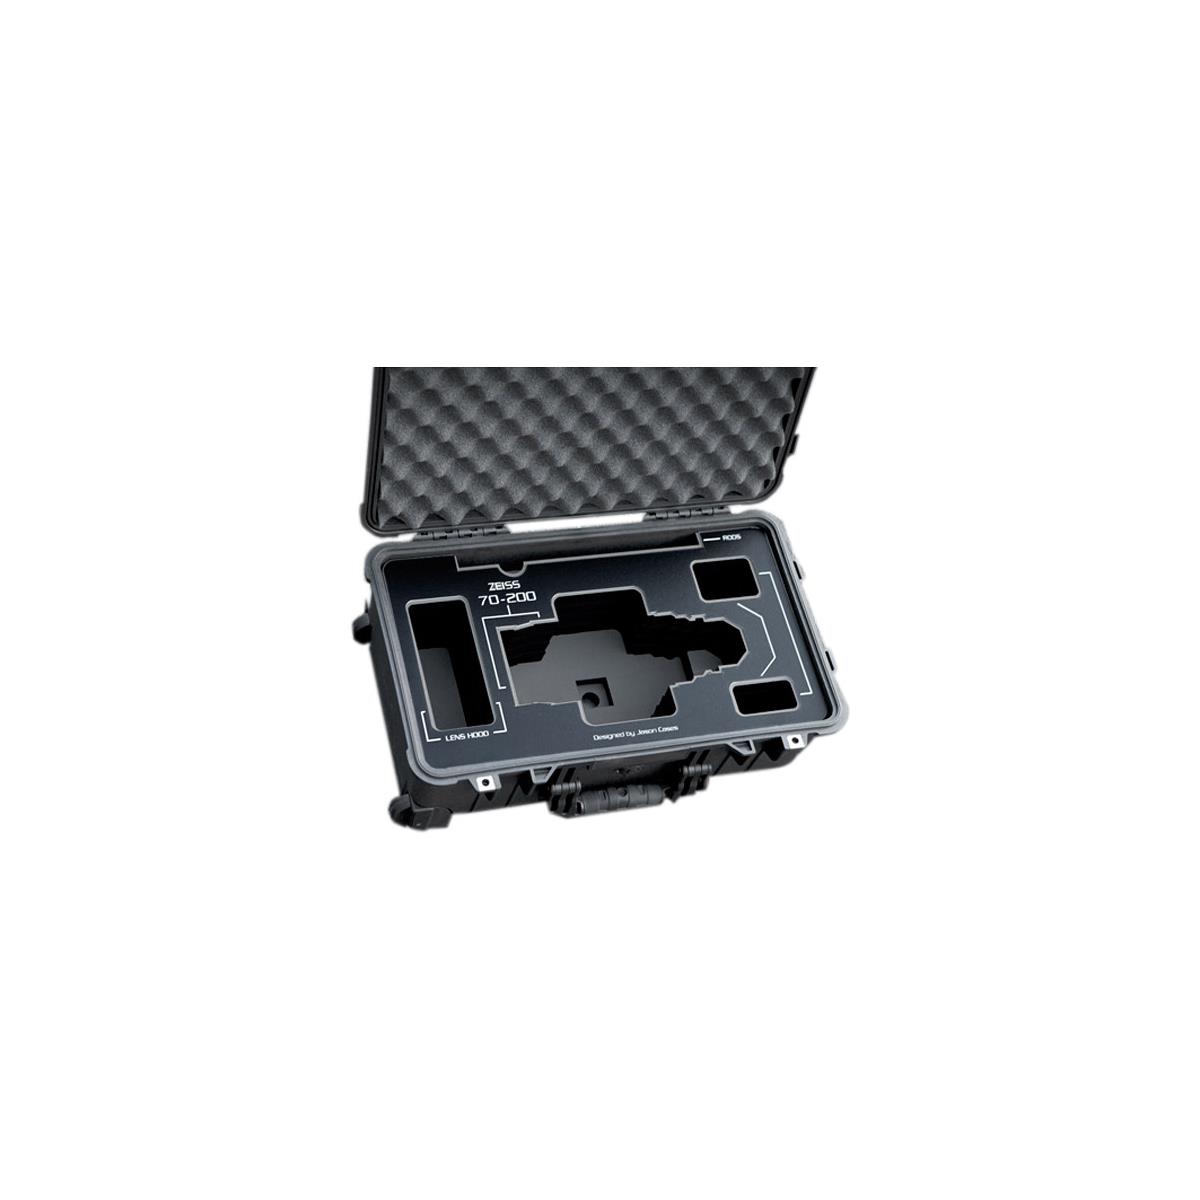 Image of Jason Cases Case for Zeiss 70-200mm CZ.2 Lens